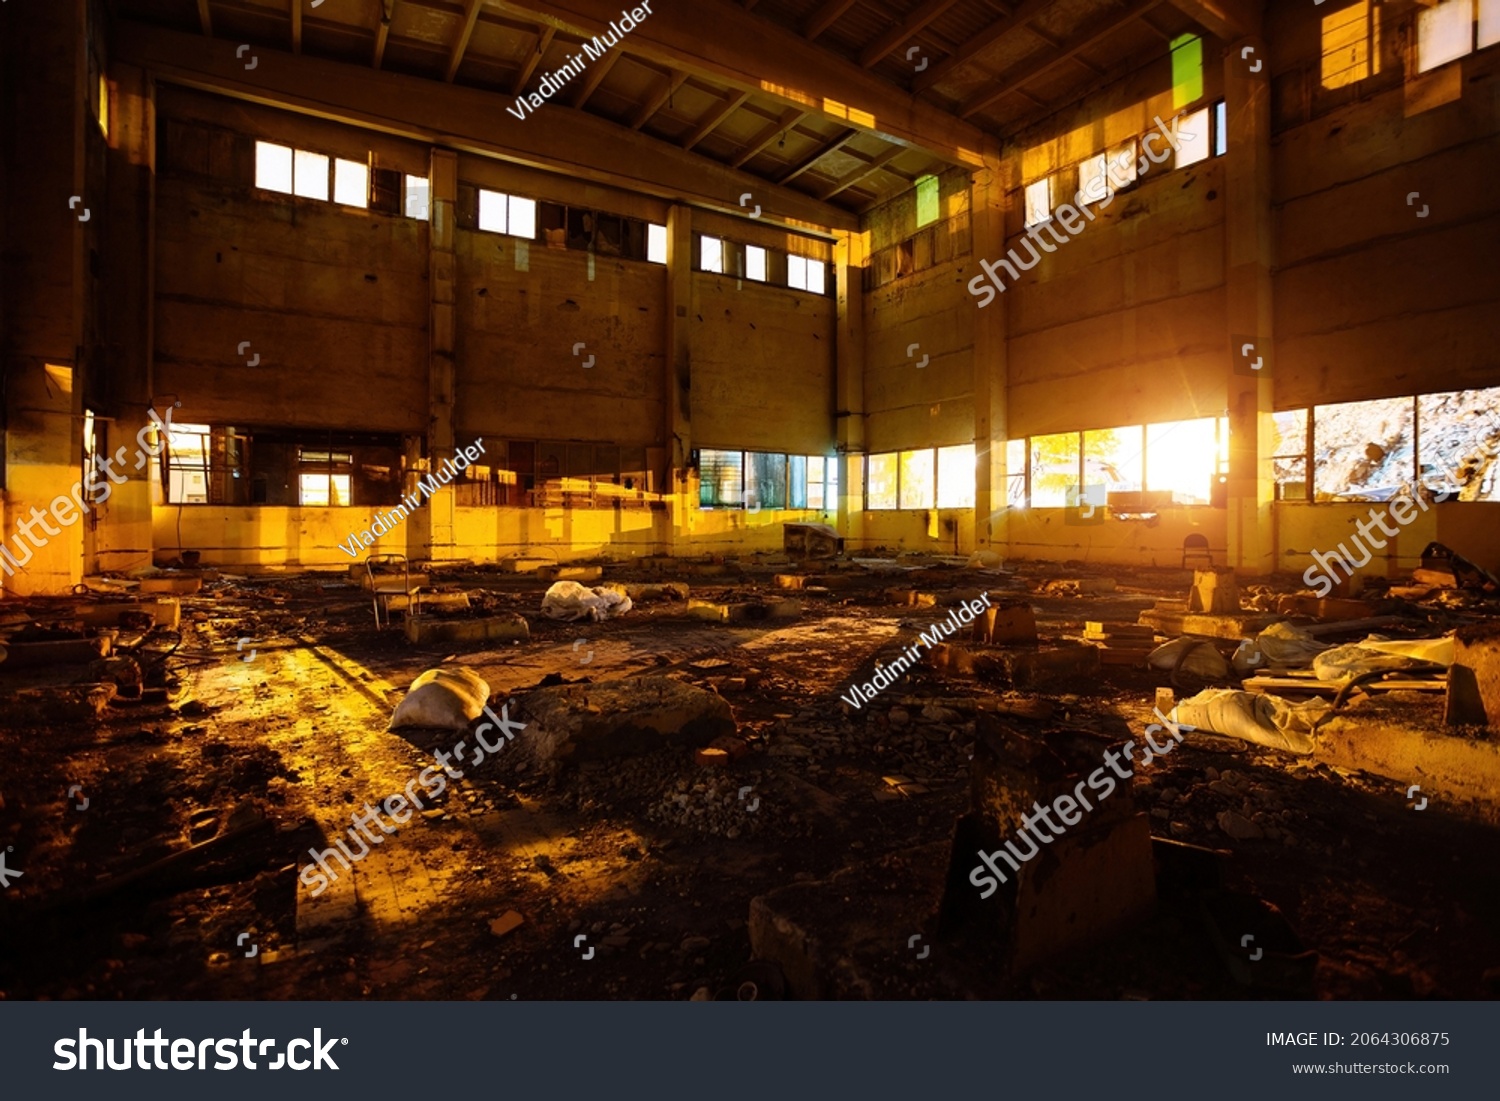 Dark creepy empty abandoned industrial building interior at night. #2064306875